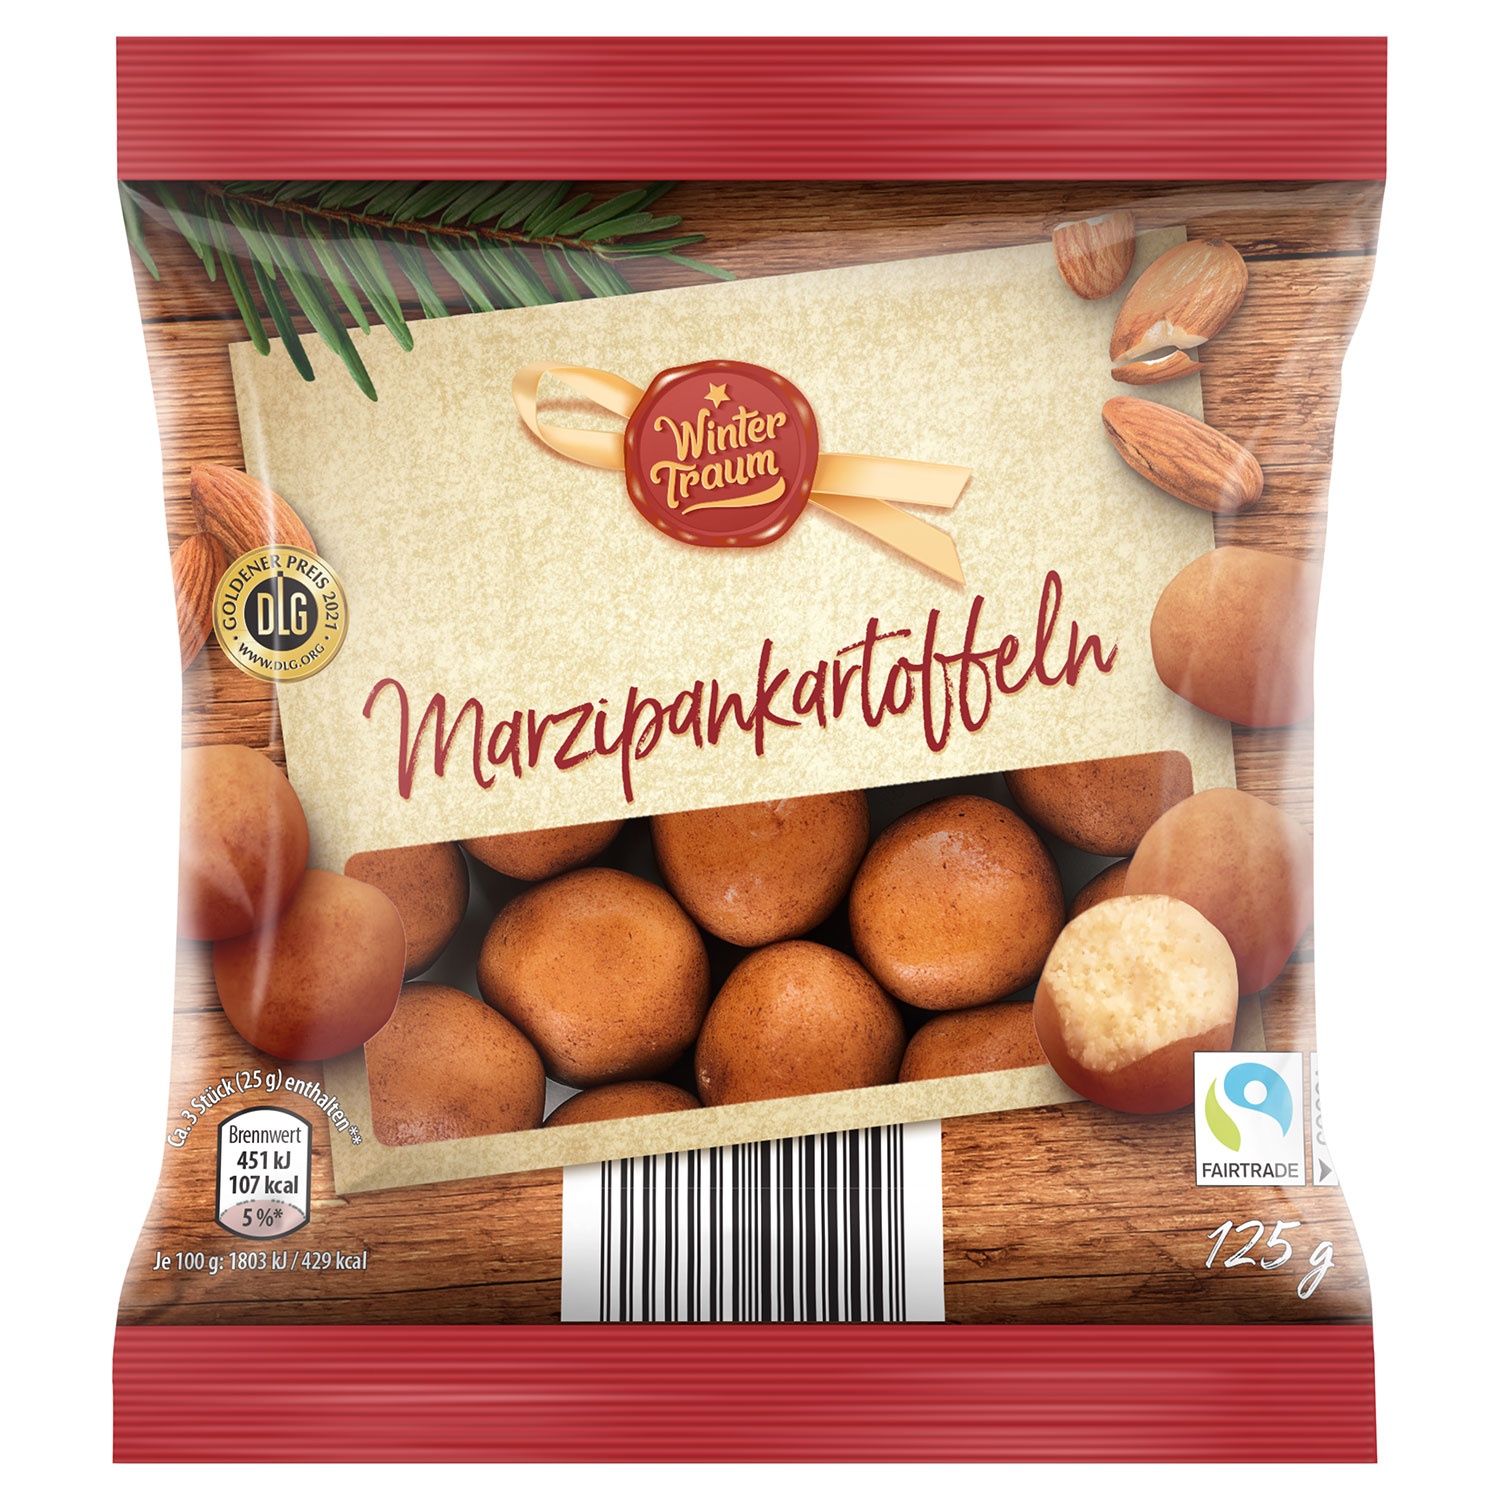 WINTERTRAUM Marzipankartoffeln 125 g